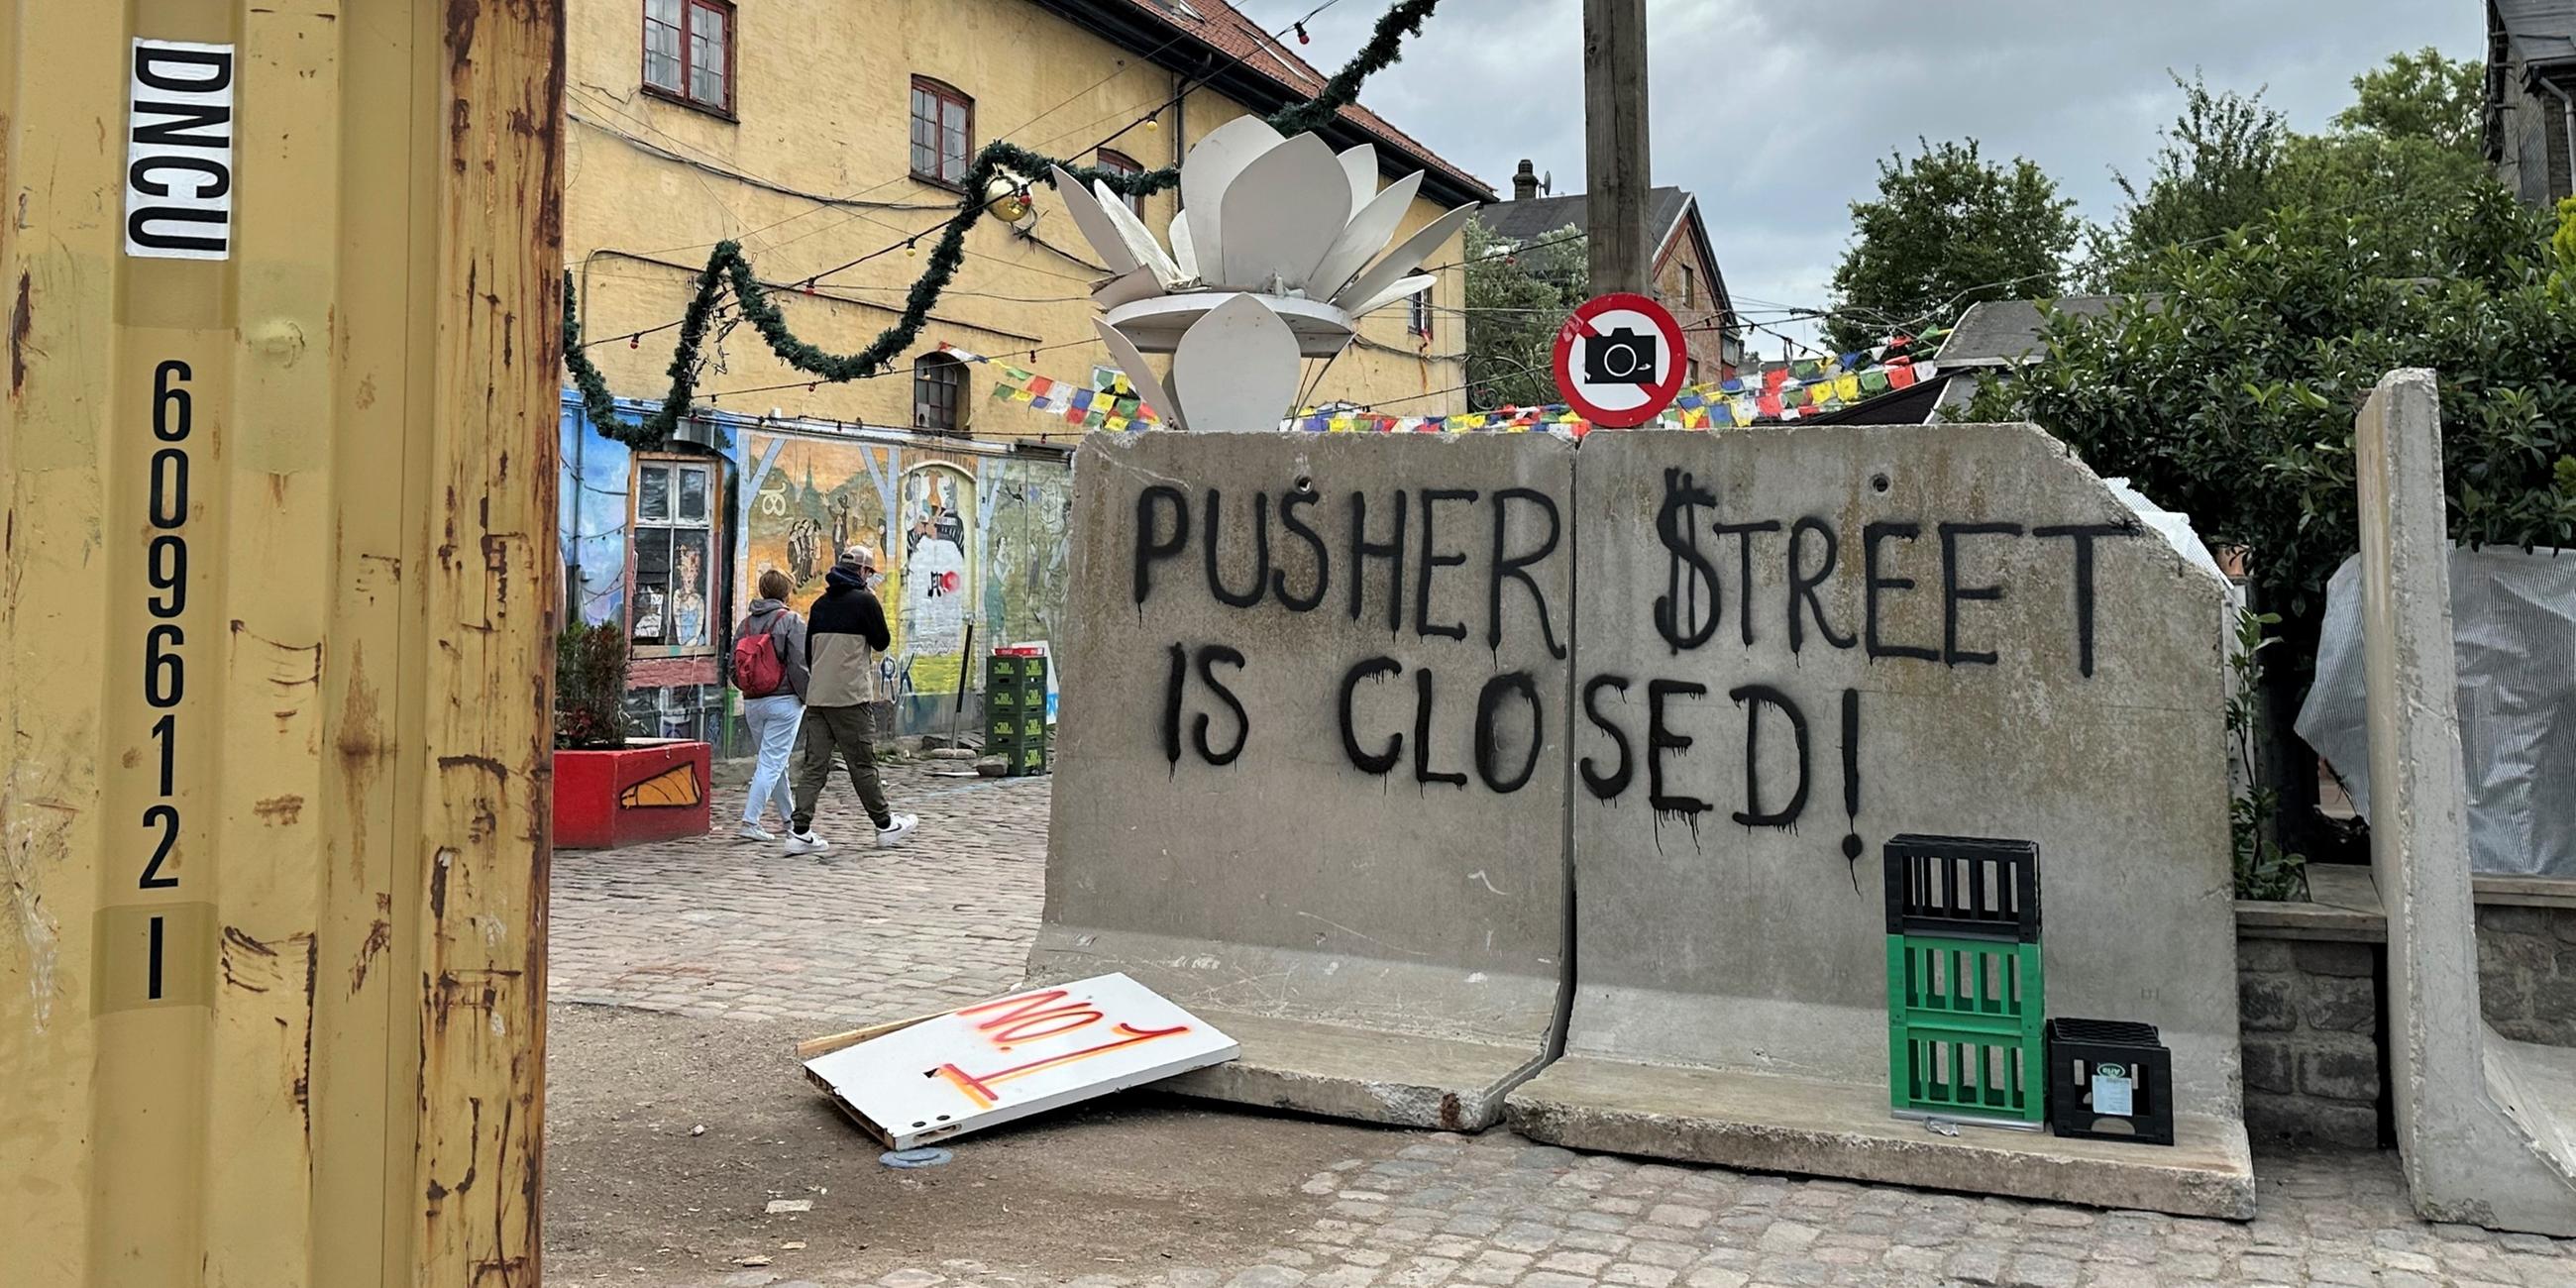 Dänemark, Kopenhagen: "Pusher Street is closed!" (Die Pusher Street ist geschlossen) steht an einer Blockade in der Kopenhagener Freistadt Christiania geschrieben.